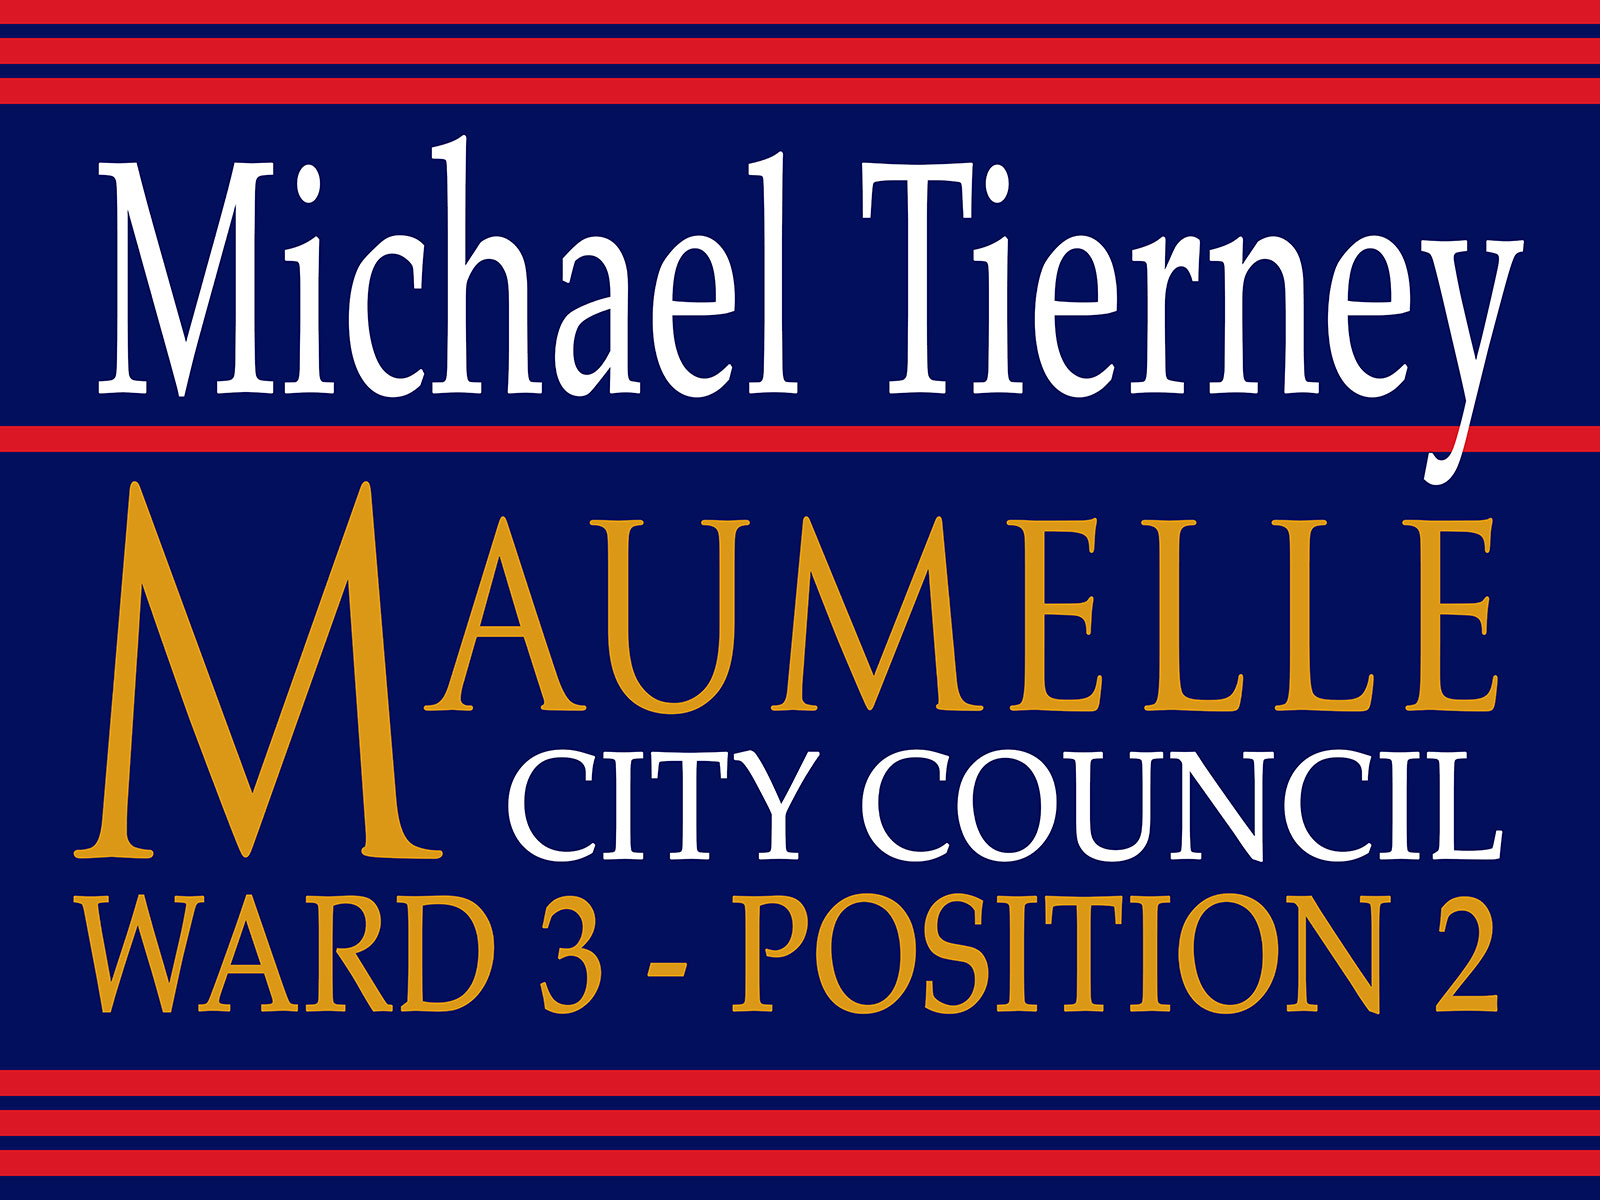 Michael Tierney for Maumelle City Council